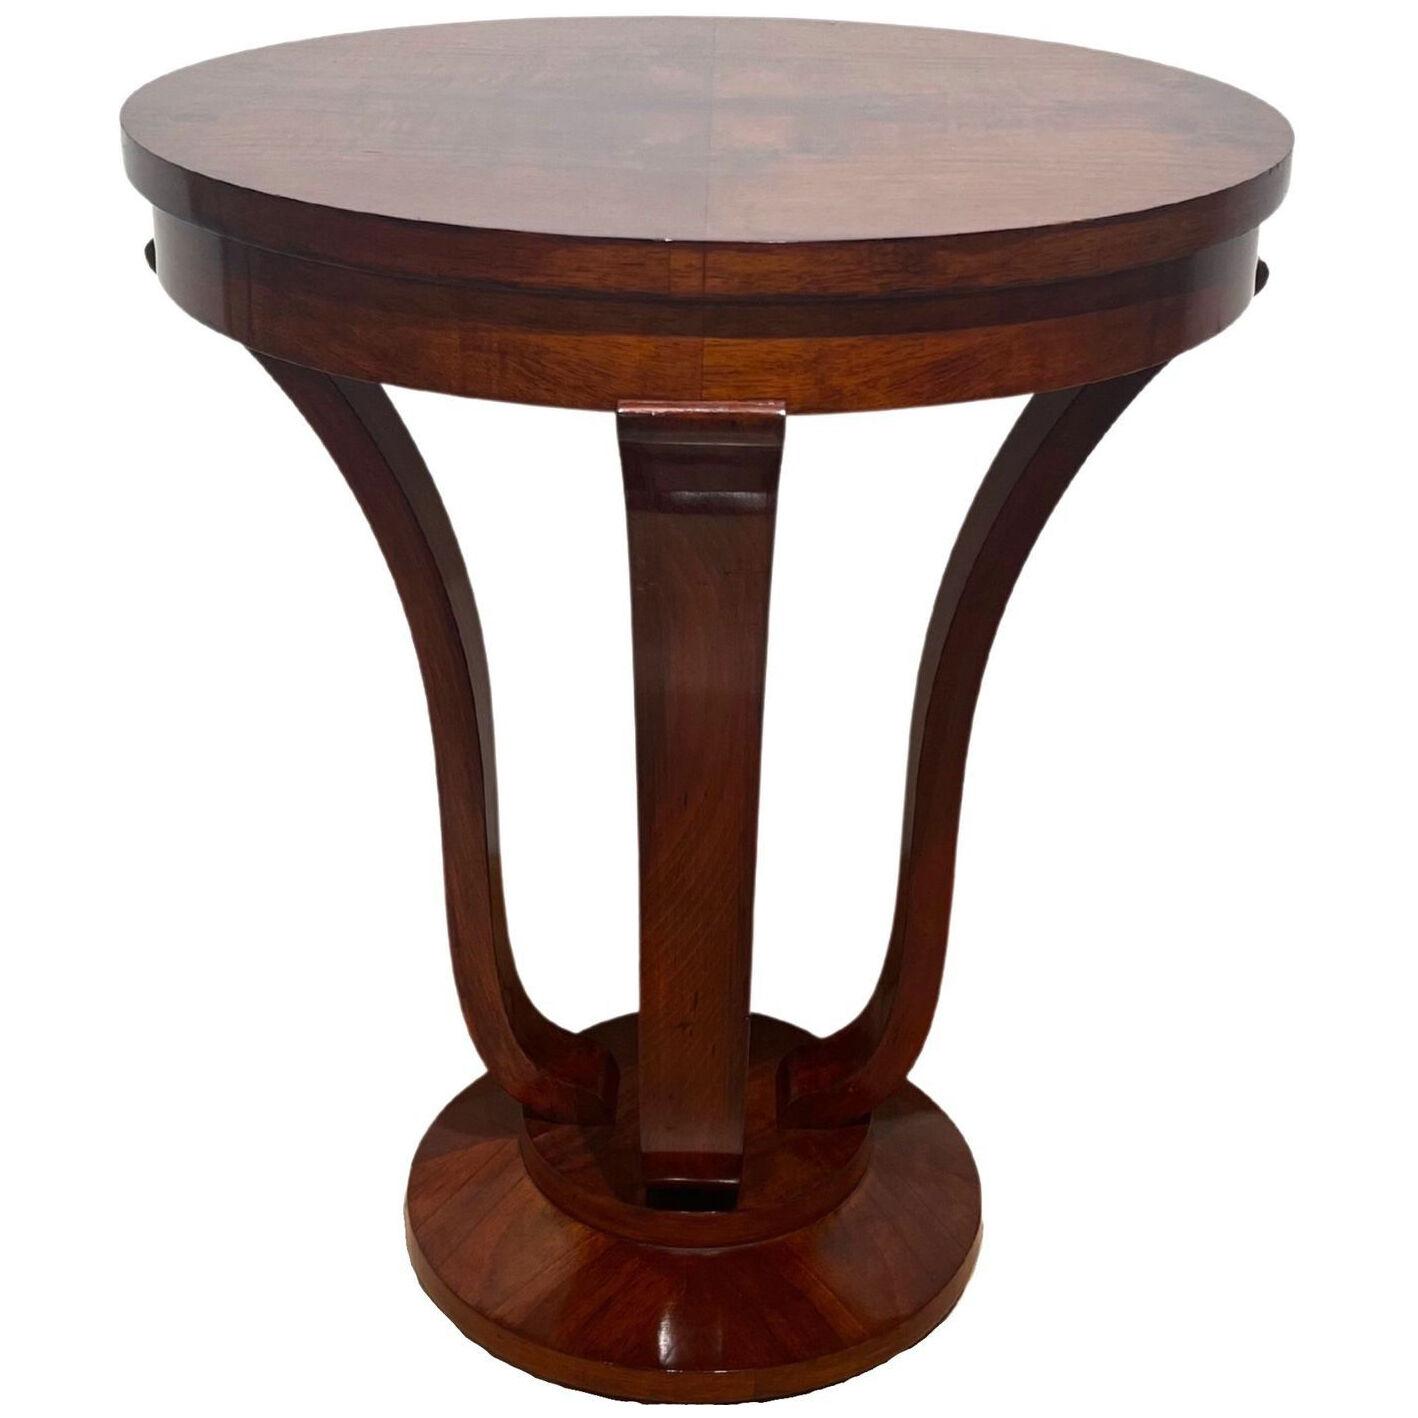 Round Art Deco Side Table, Walnut Veneer, France circa 1930